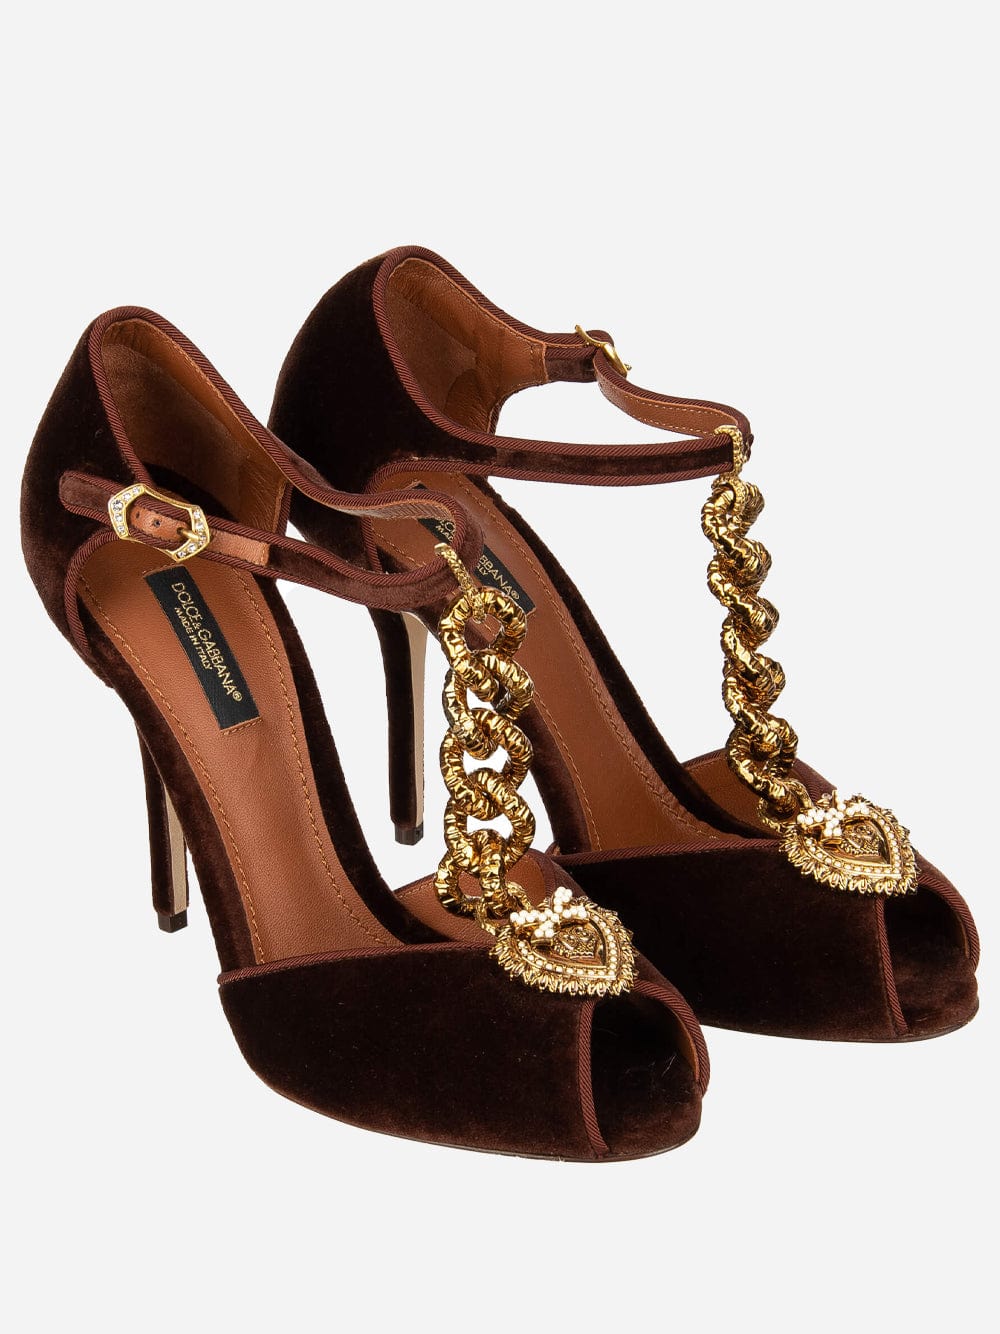 Dolce & Gabbana | Shoes | Dolce Gabbana Daisy Crystal Embellished Sandals |  Poshmark